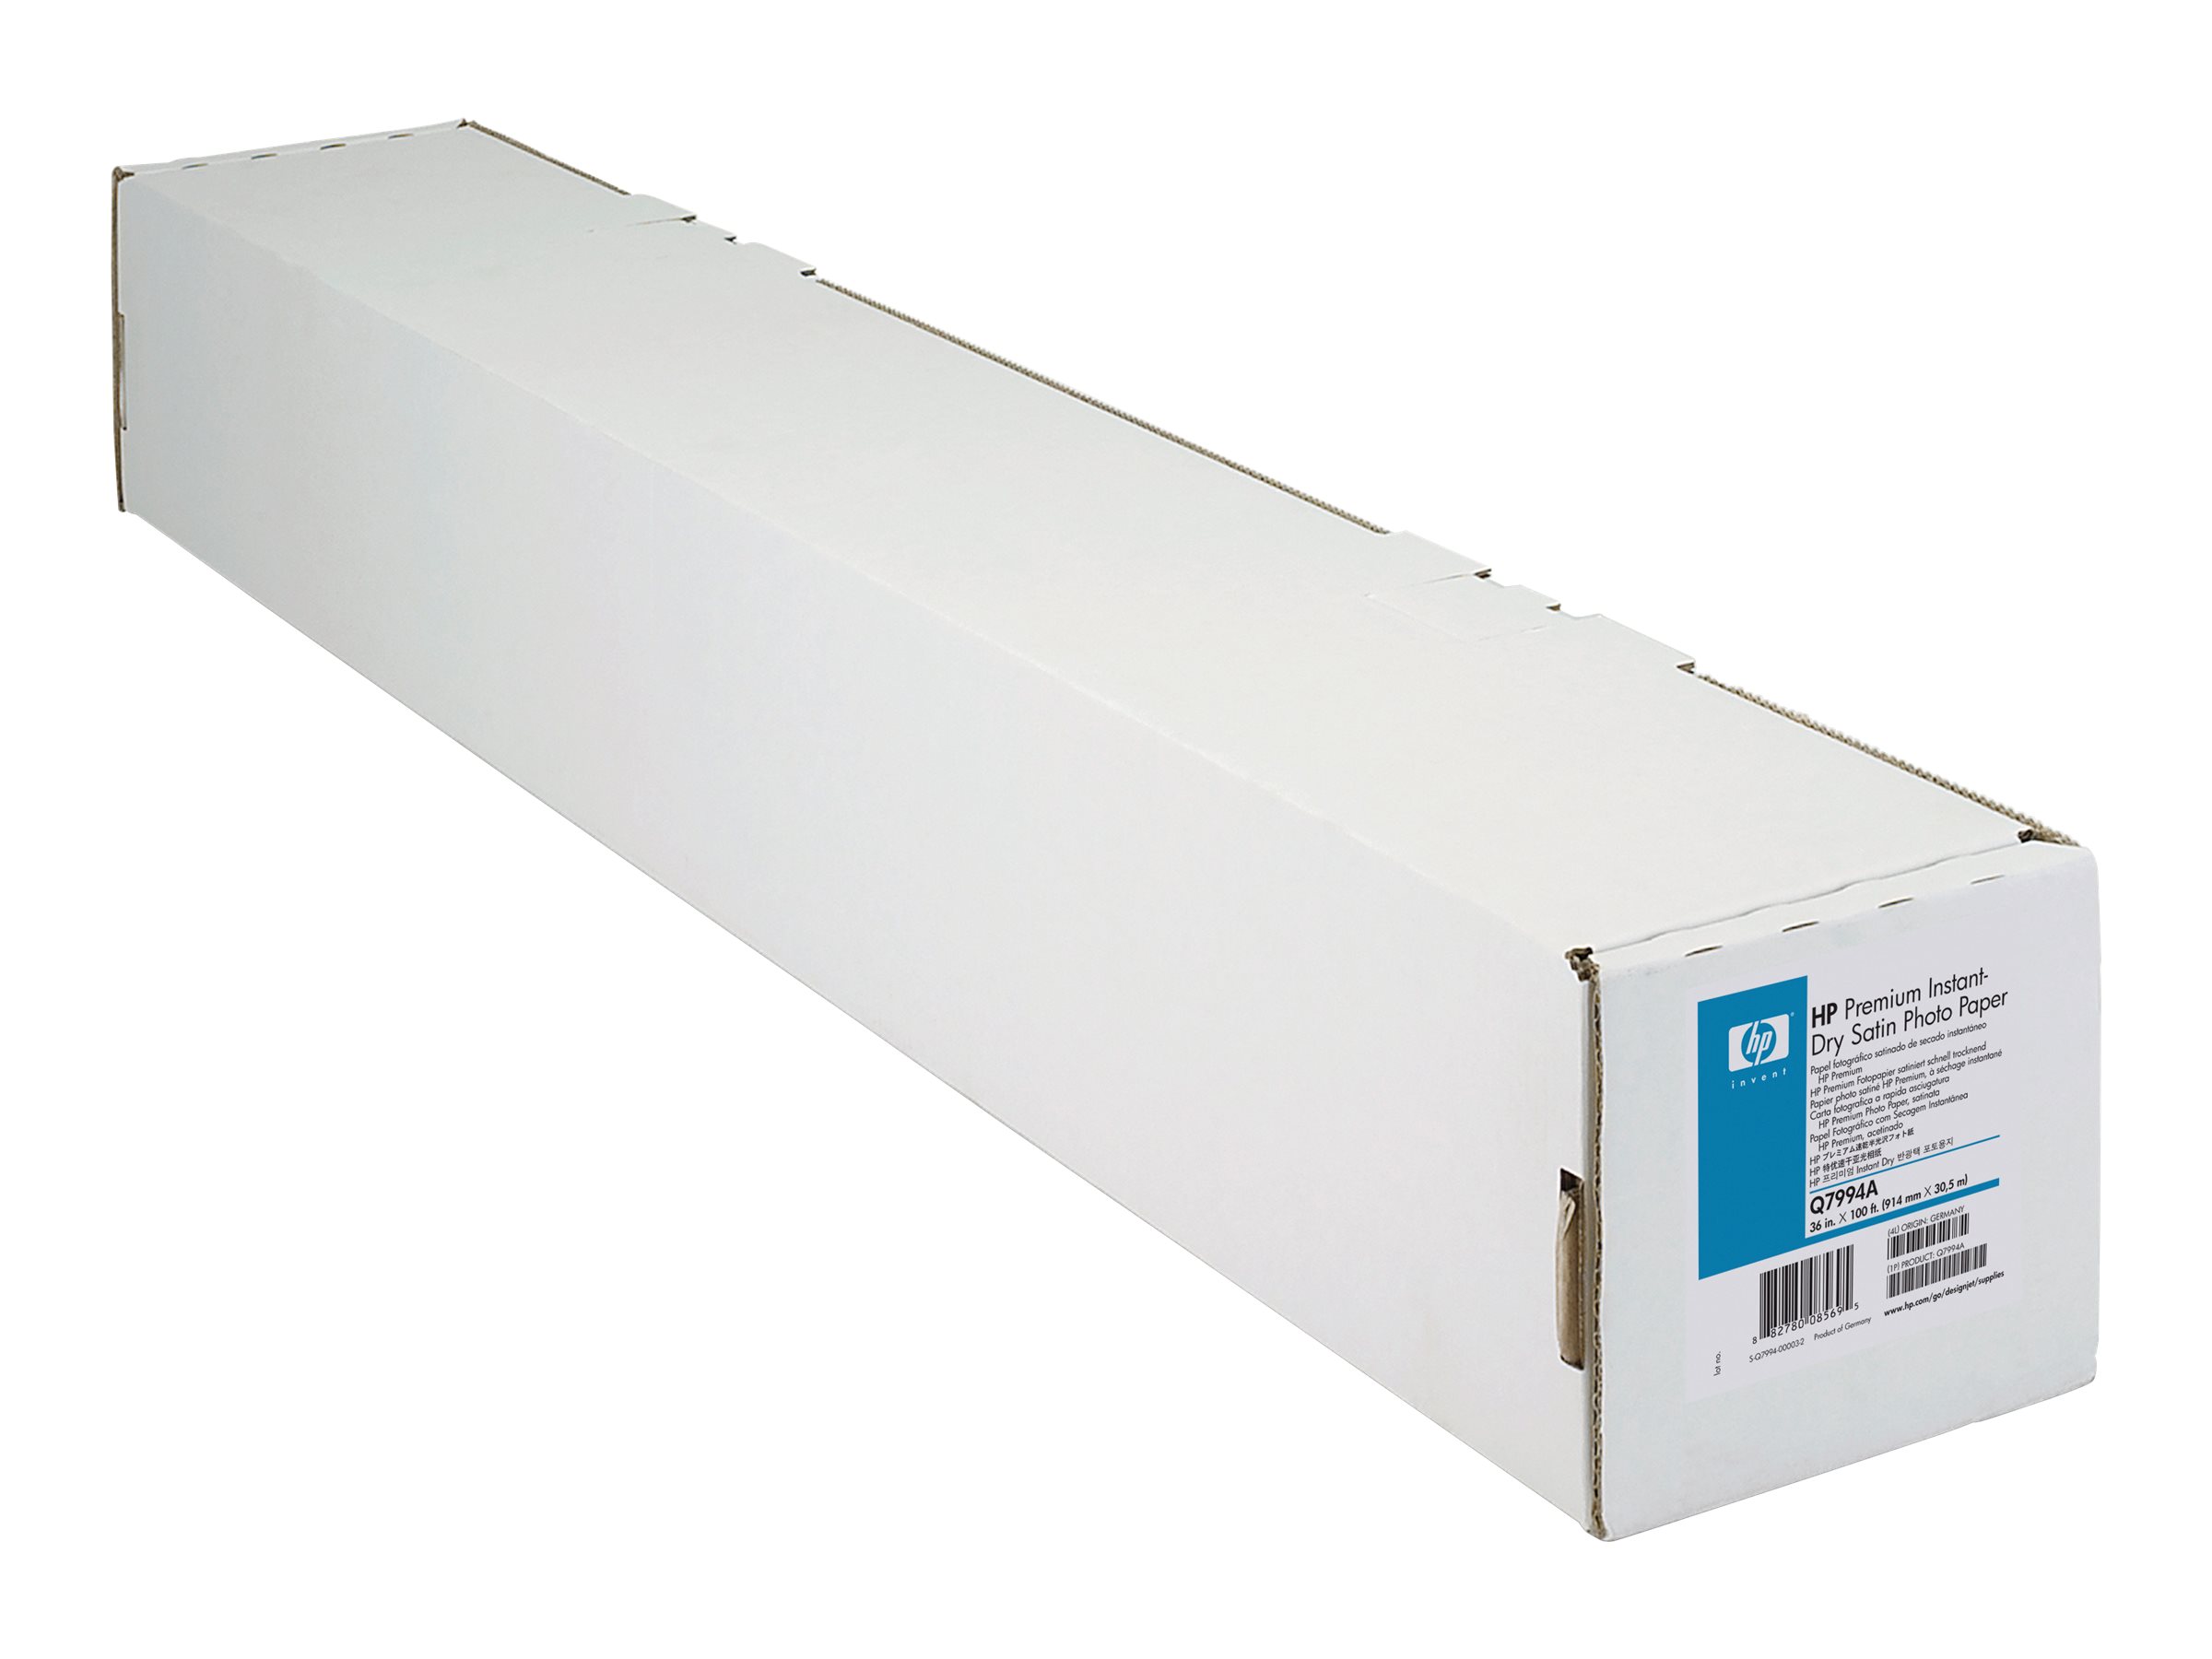 HP Premium Instant-dry Satin Photo Paper - Seidig - Rolle (152,4 cm x 30,5 m) - 260 g/m - 1 Rolle(n) Fotopapier - fr DesignJet